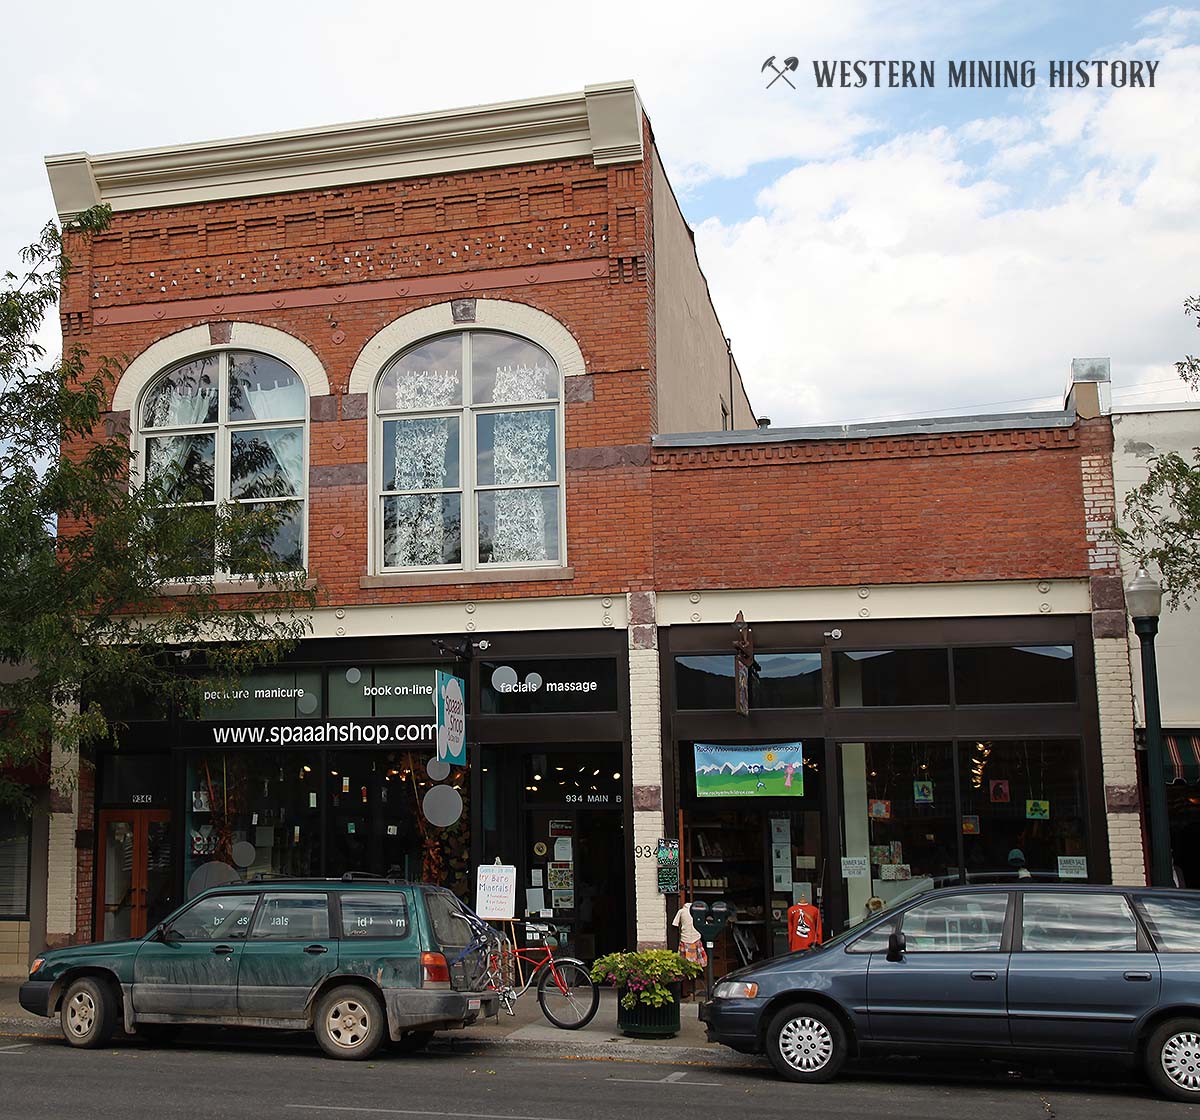 Historic Commercial Building - Durango